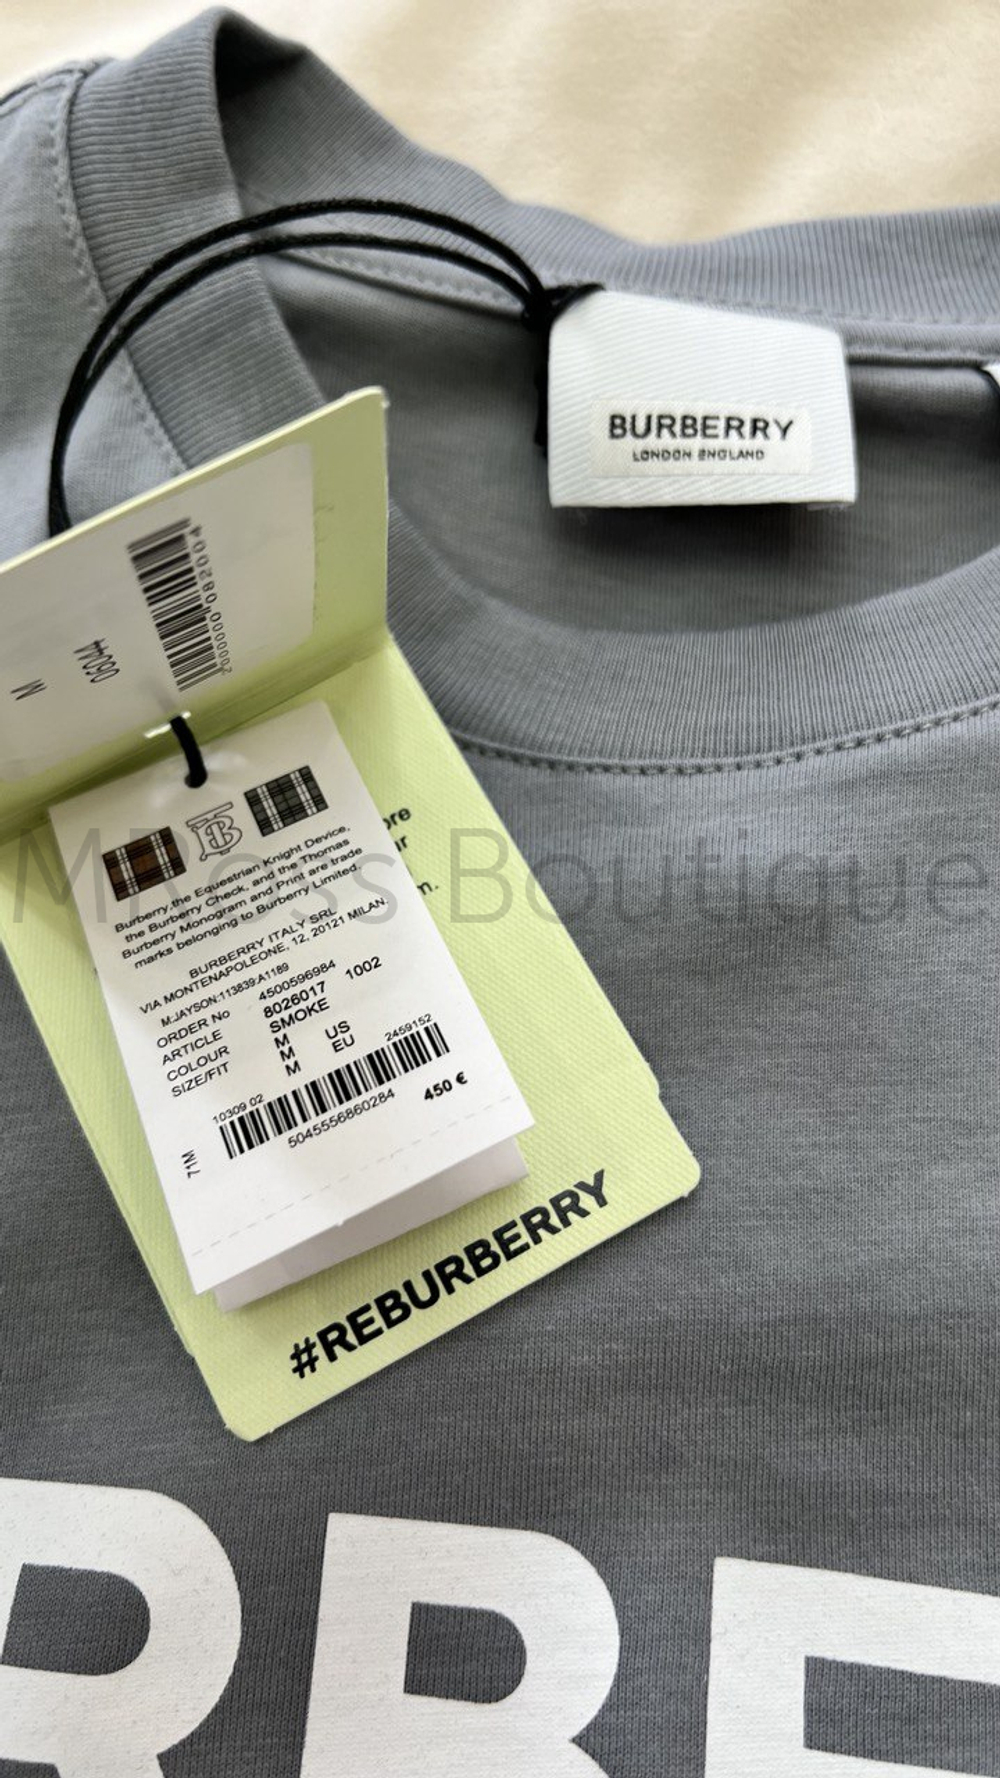 Серая футболка Burberry премиум класса